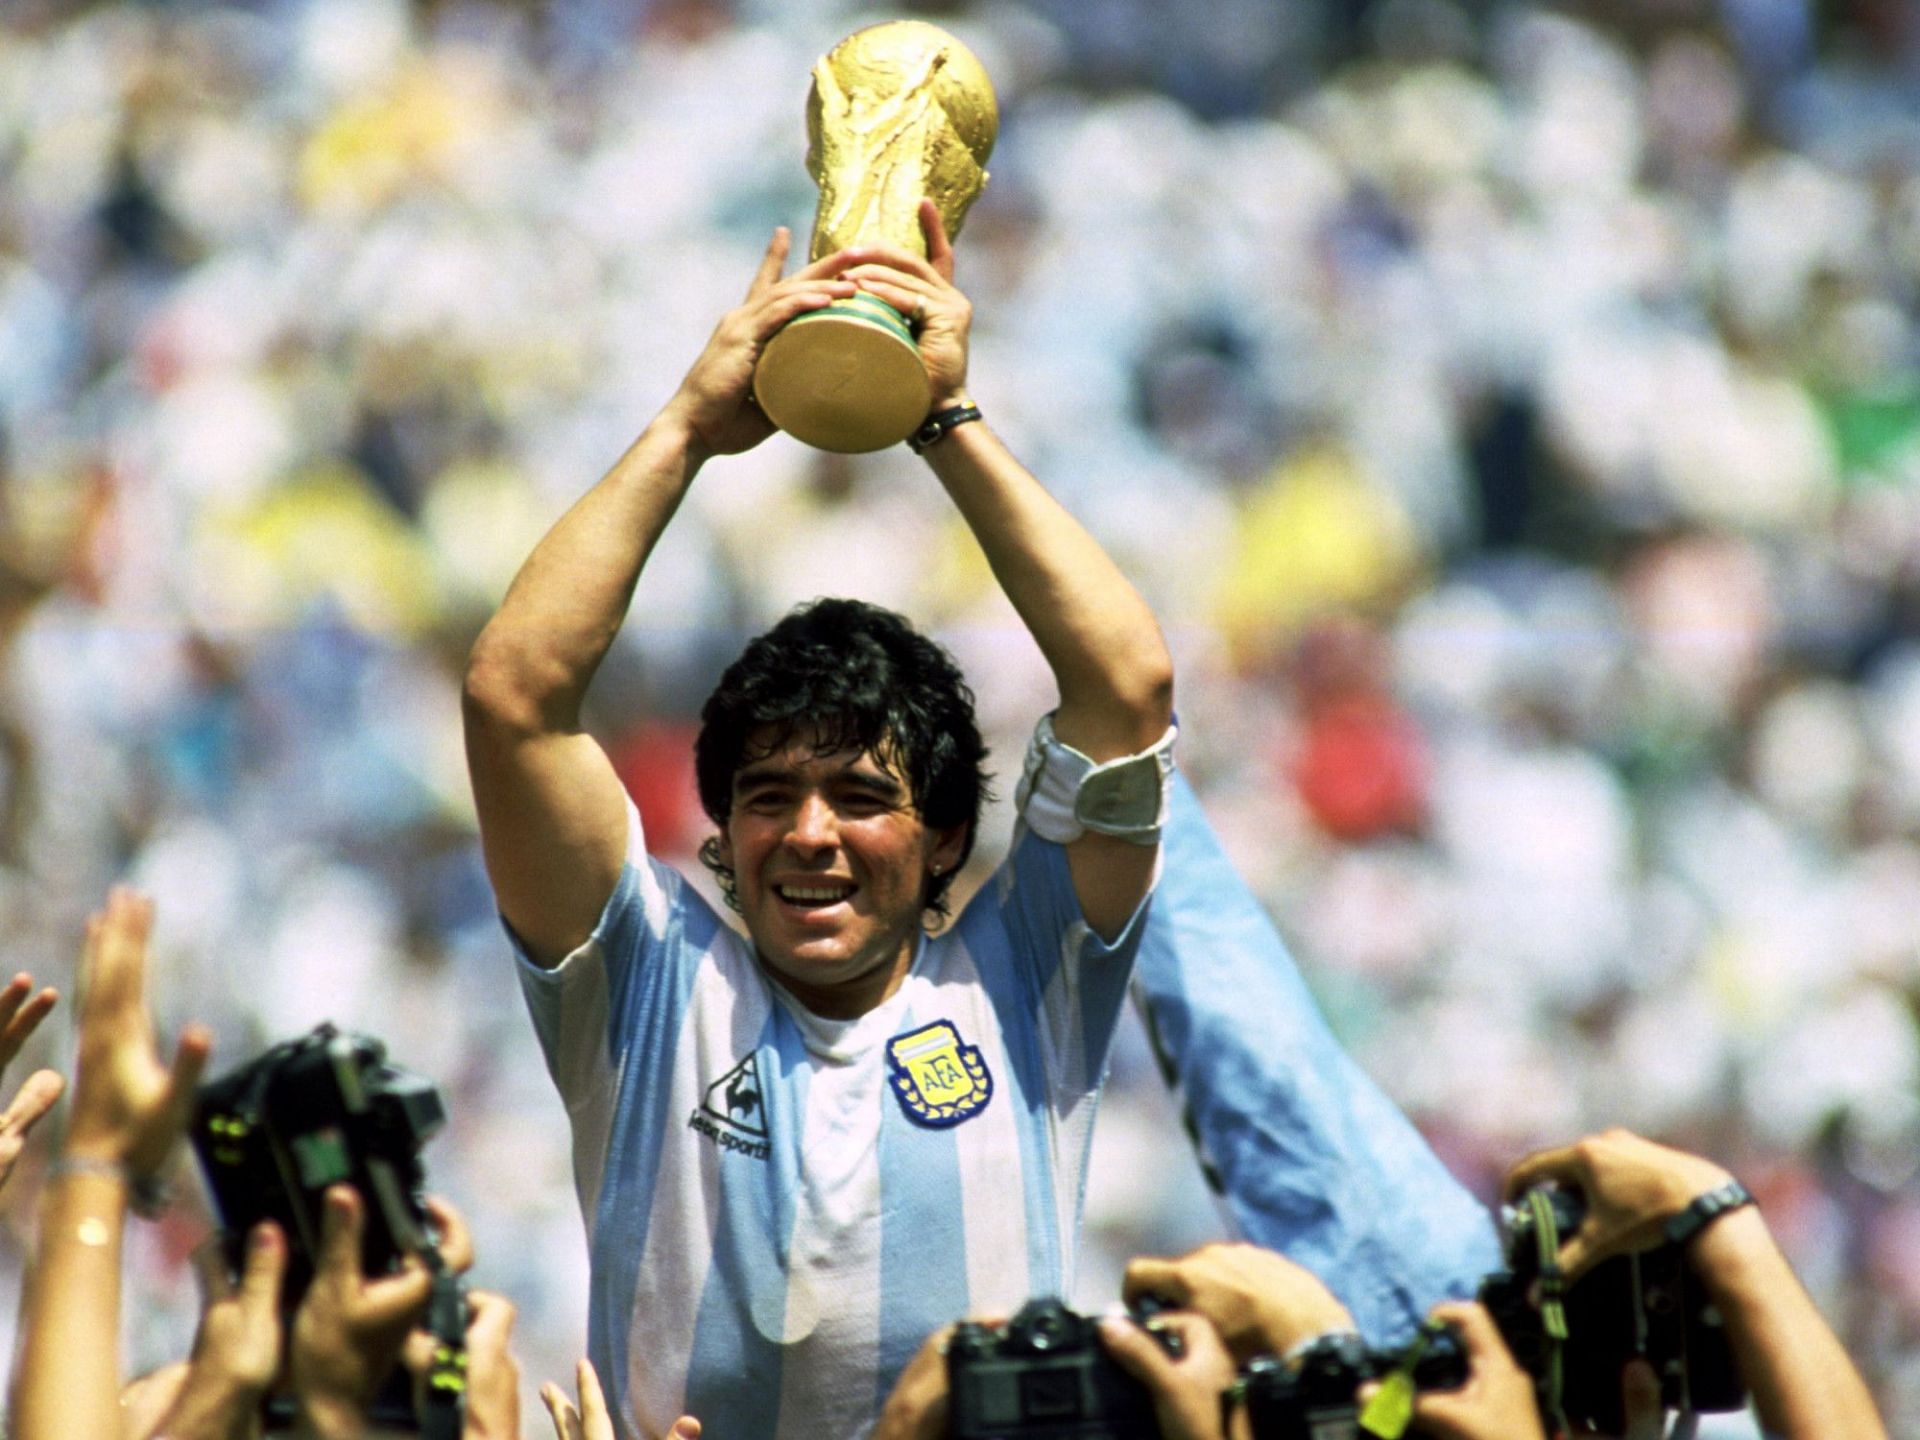 Diego Maradona with the World Cup trophy